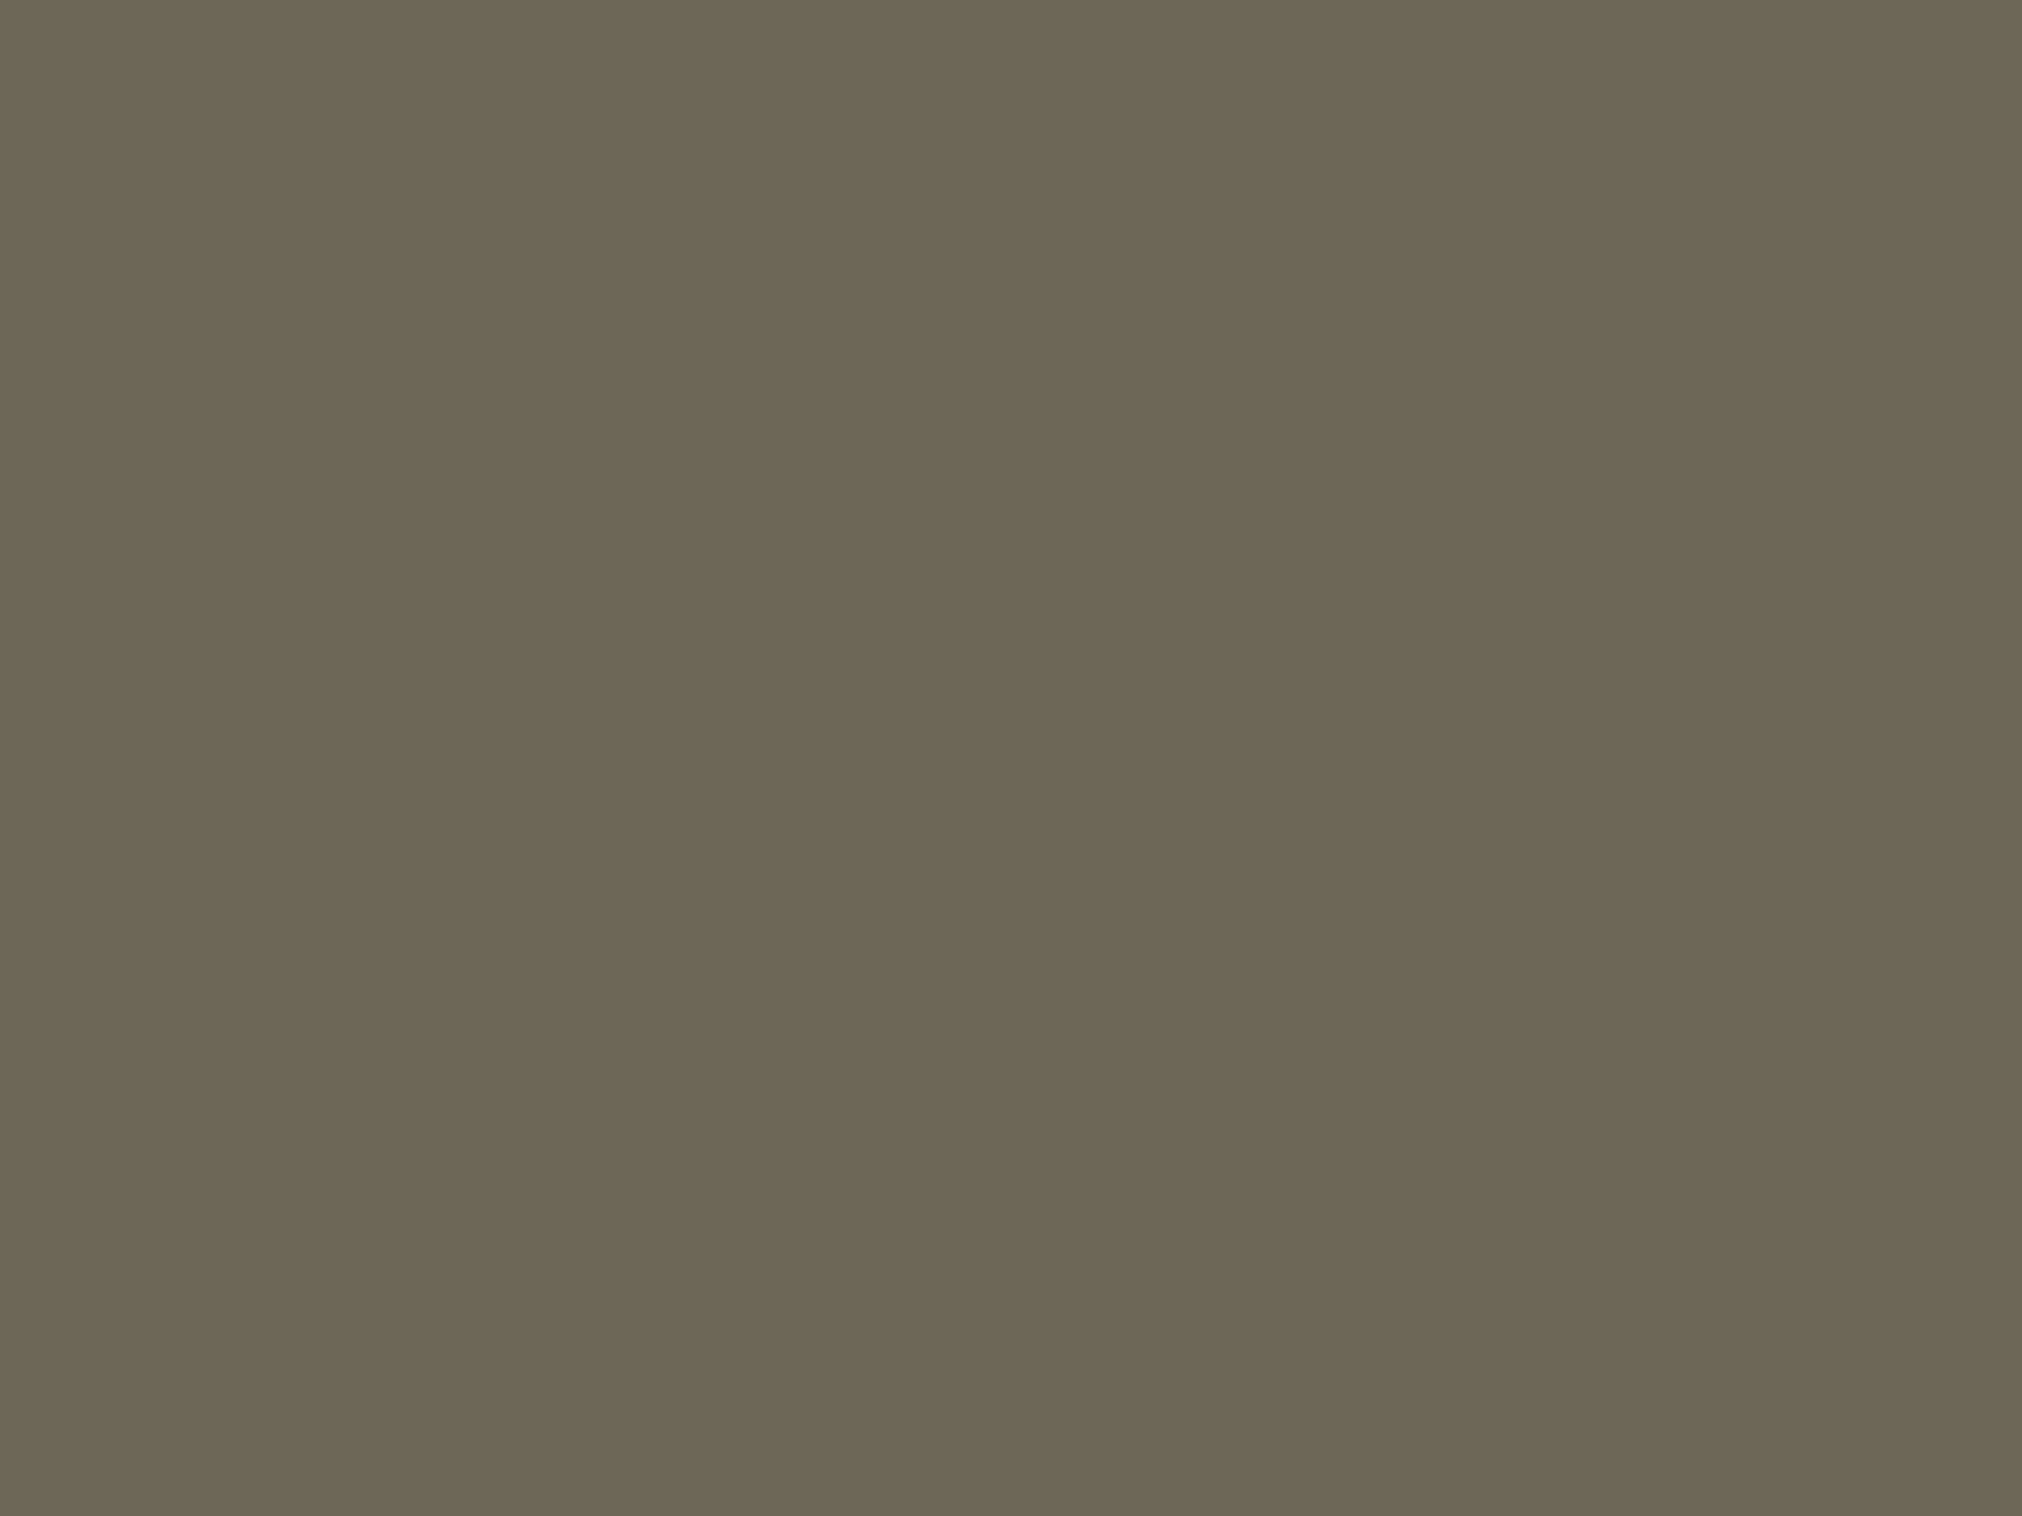 Константин Коровин. Париж. Бульвар Капуцинок (фрагмент). 1911. Государственная Третьяковская галерея, Москва